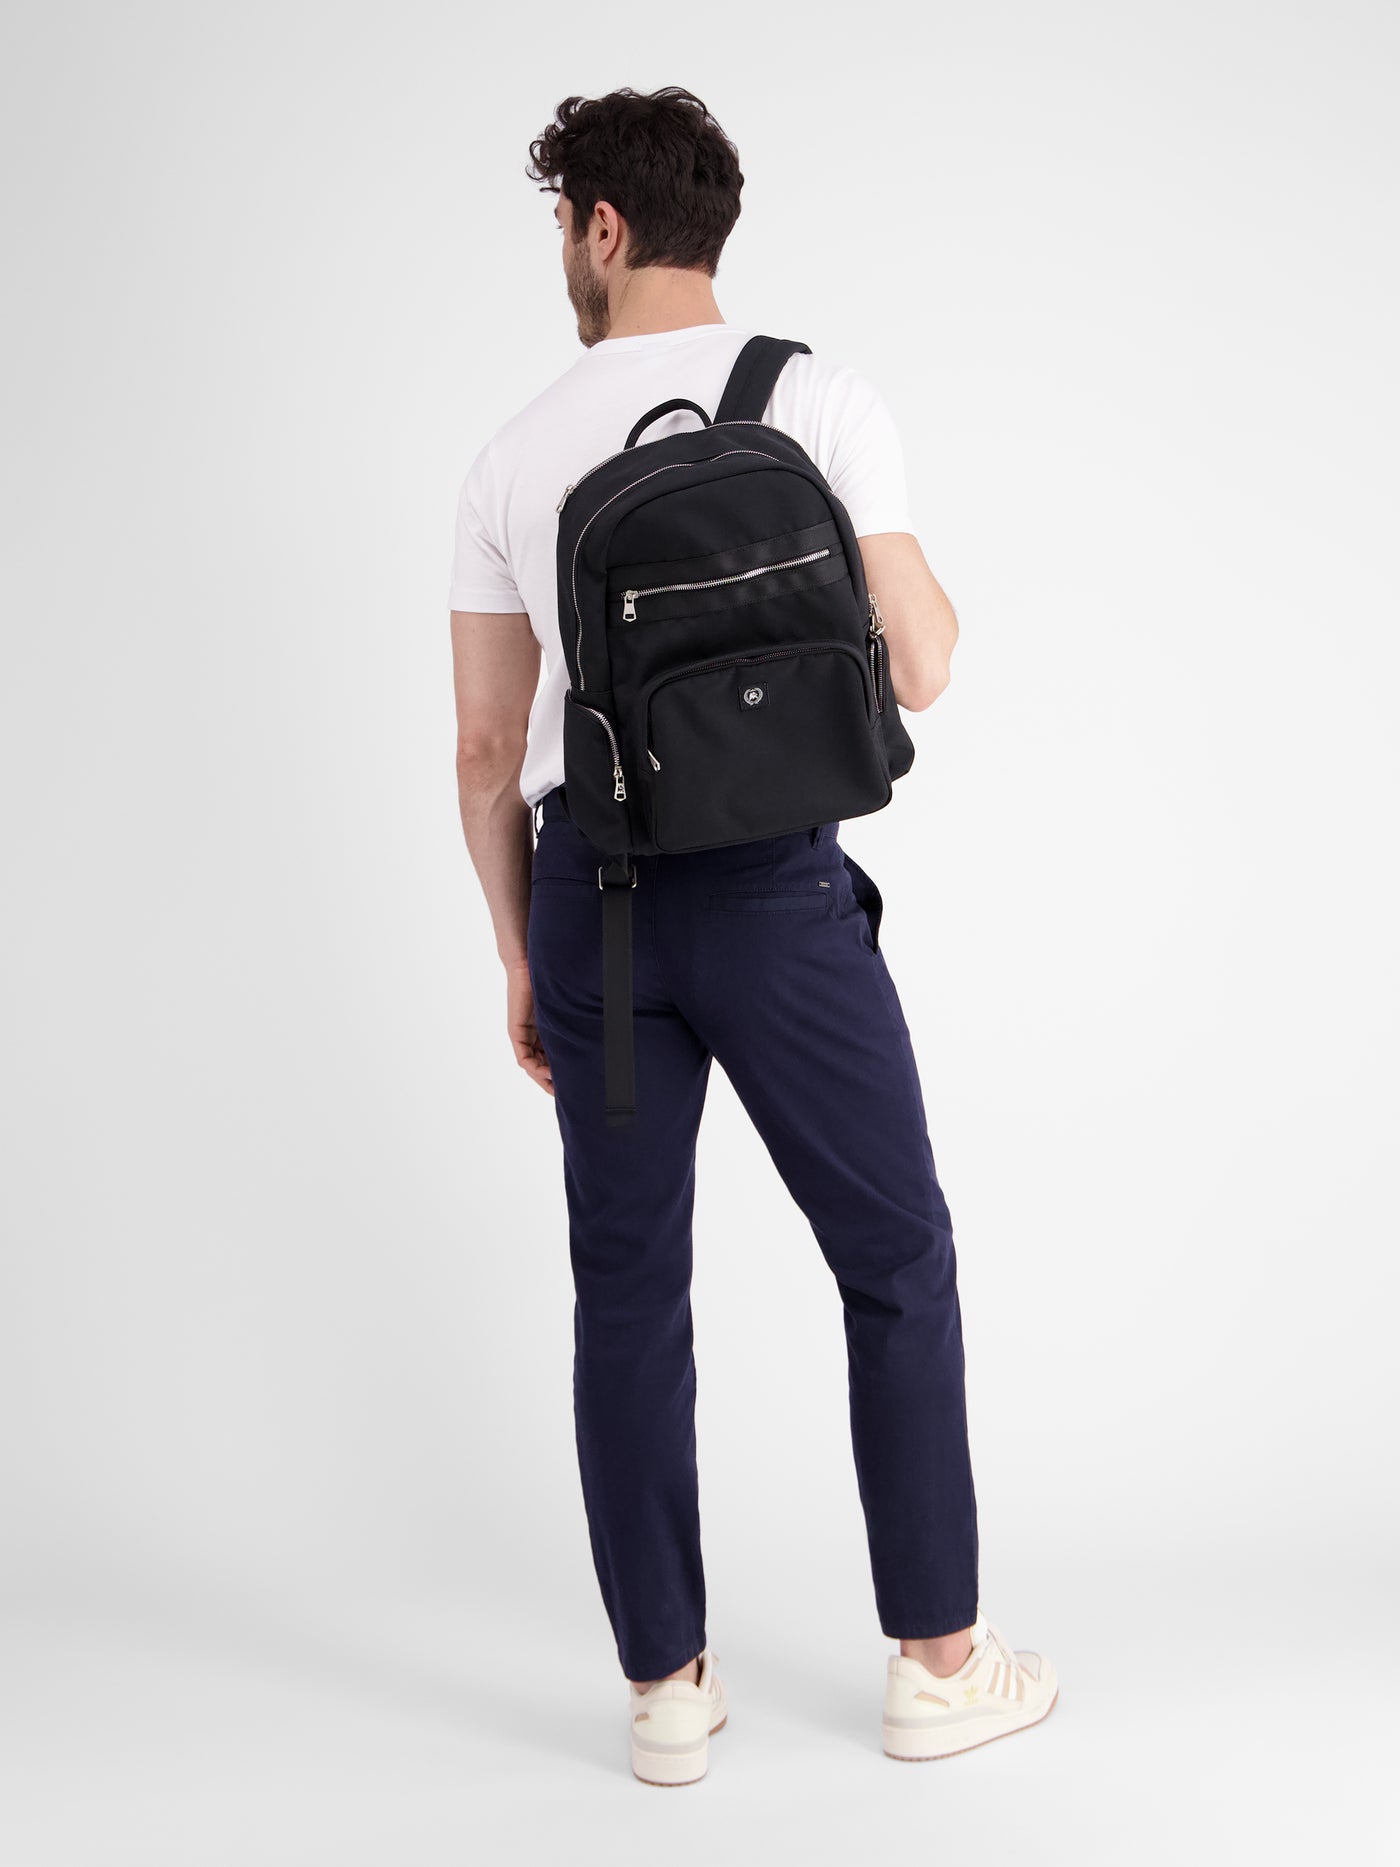 Basic backpack with many outside pockets